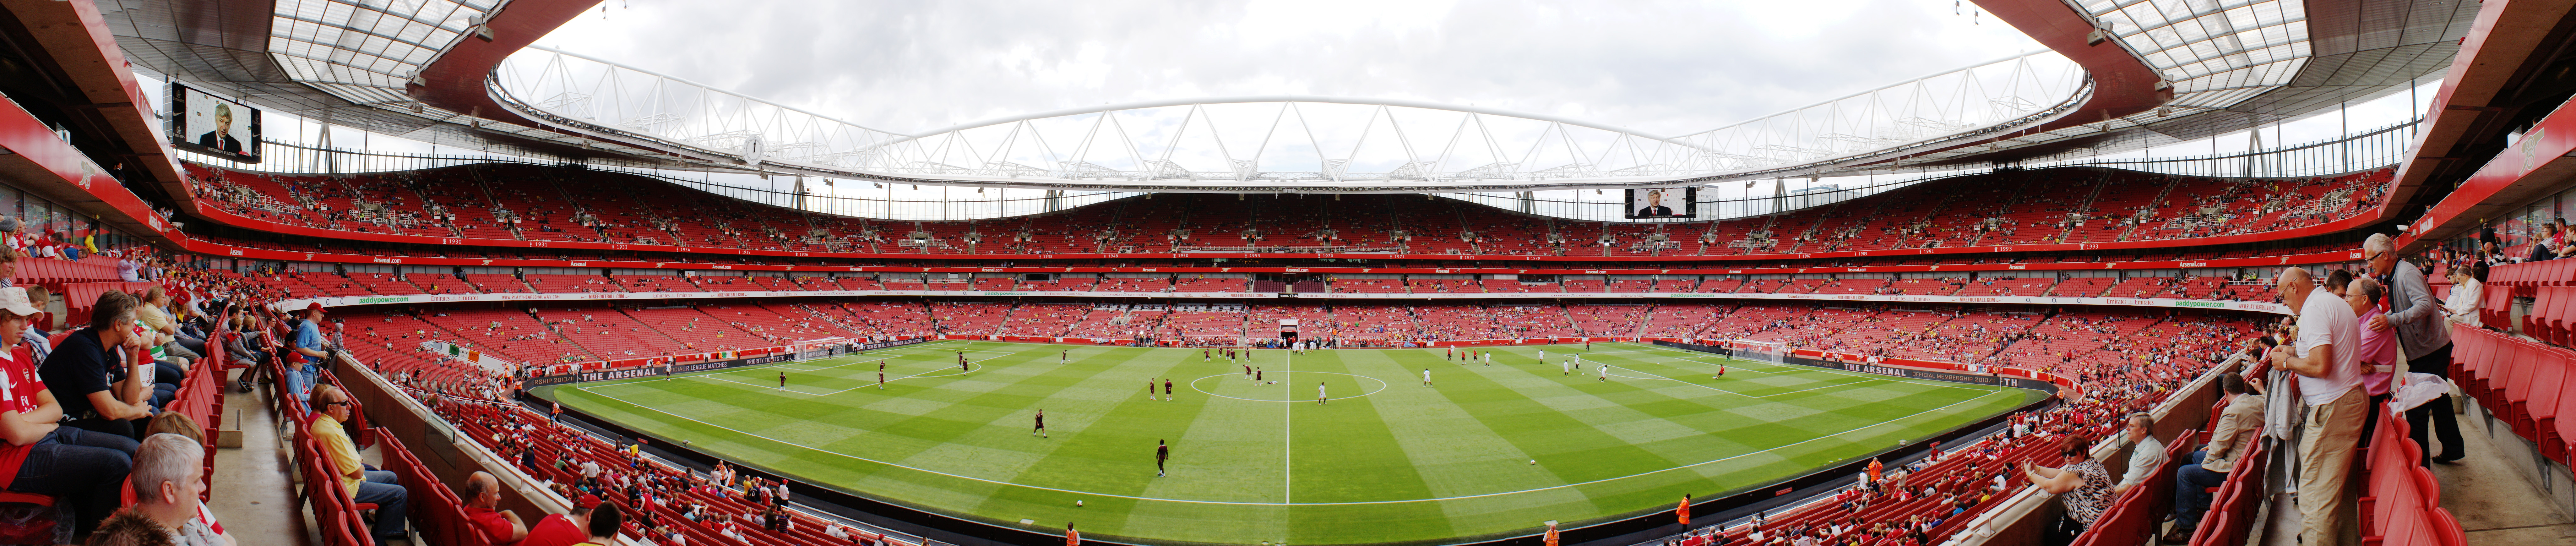 Arsenal Emirates Stadium Wallpaper For Facebook Full HD Pictures